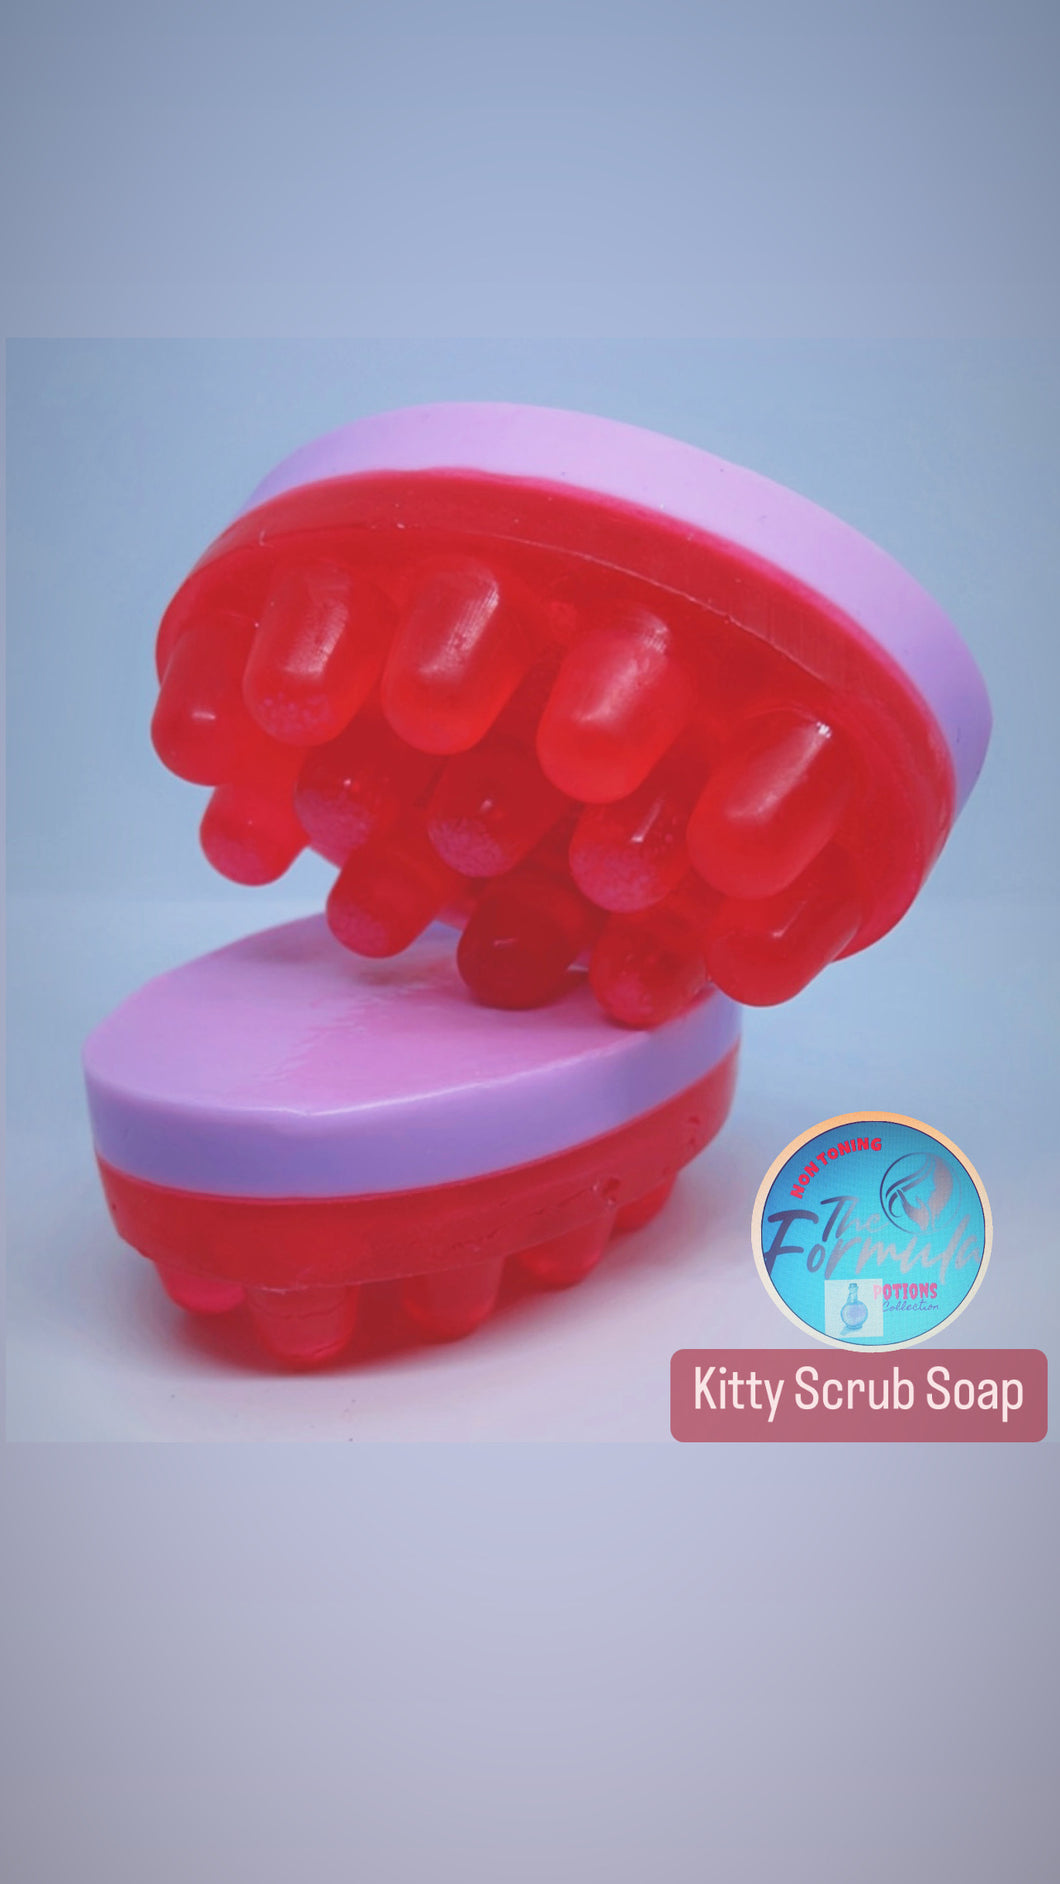 KITTY SCRUB SOAP